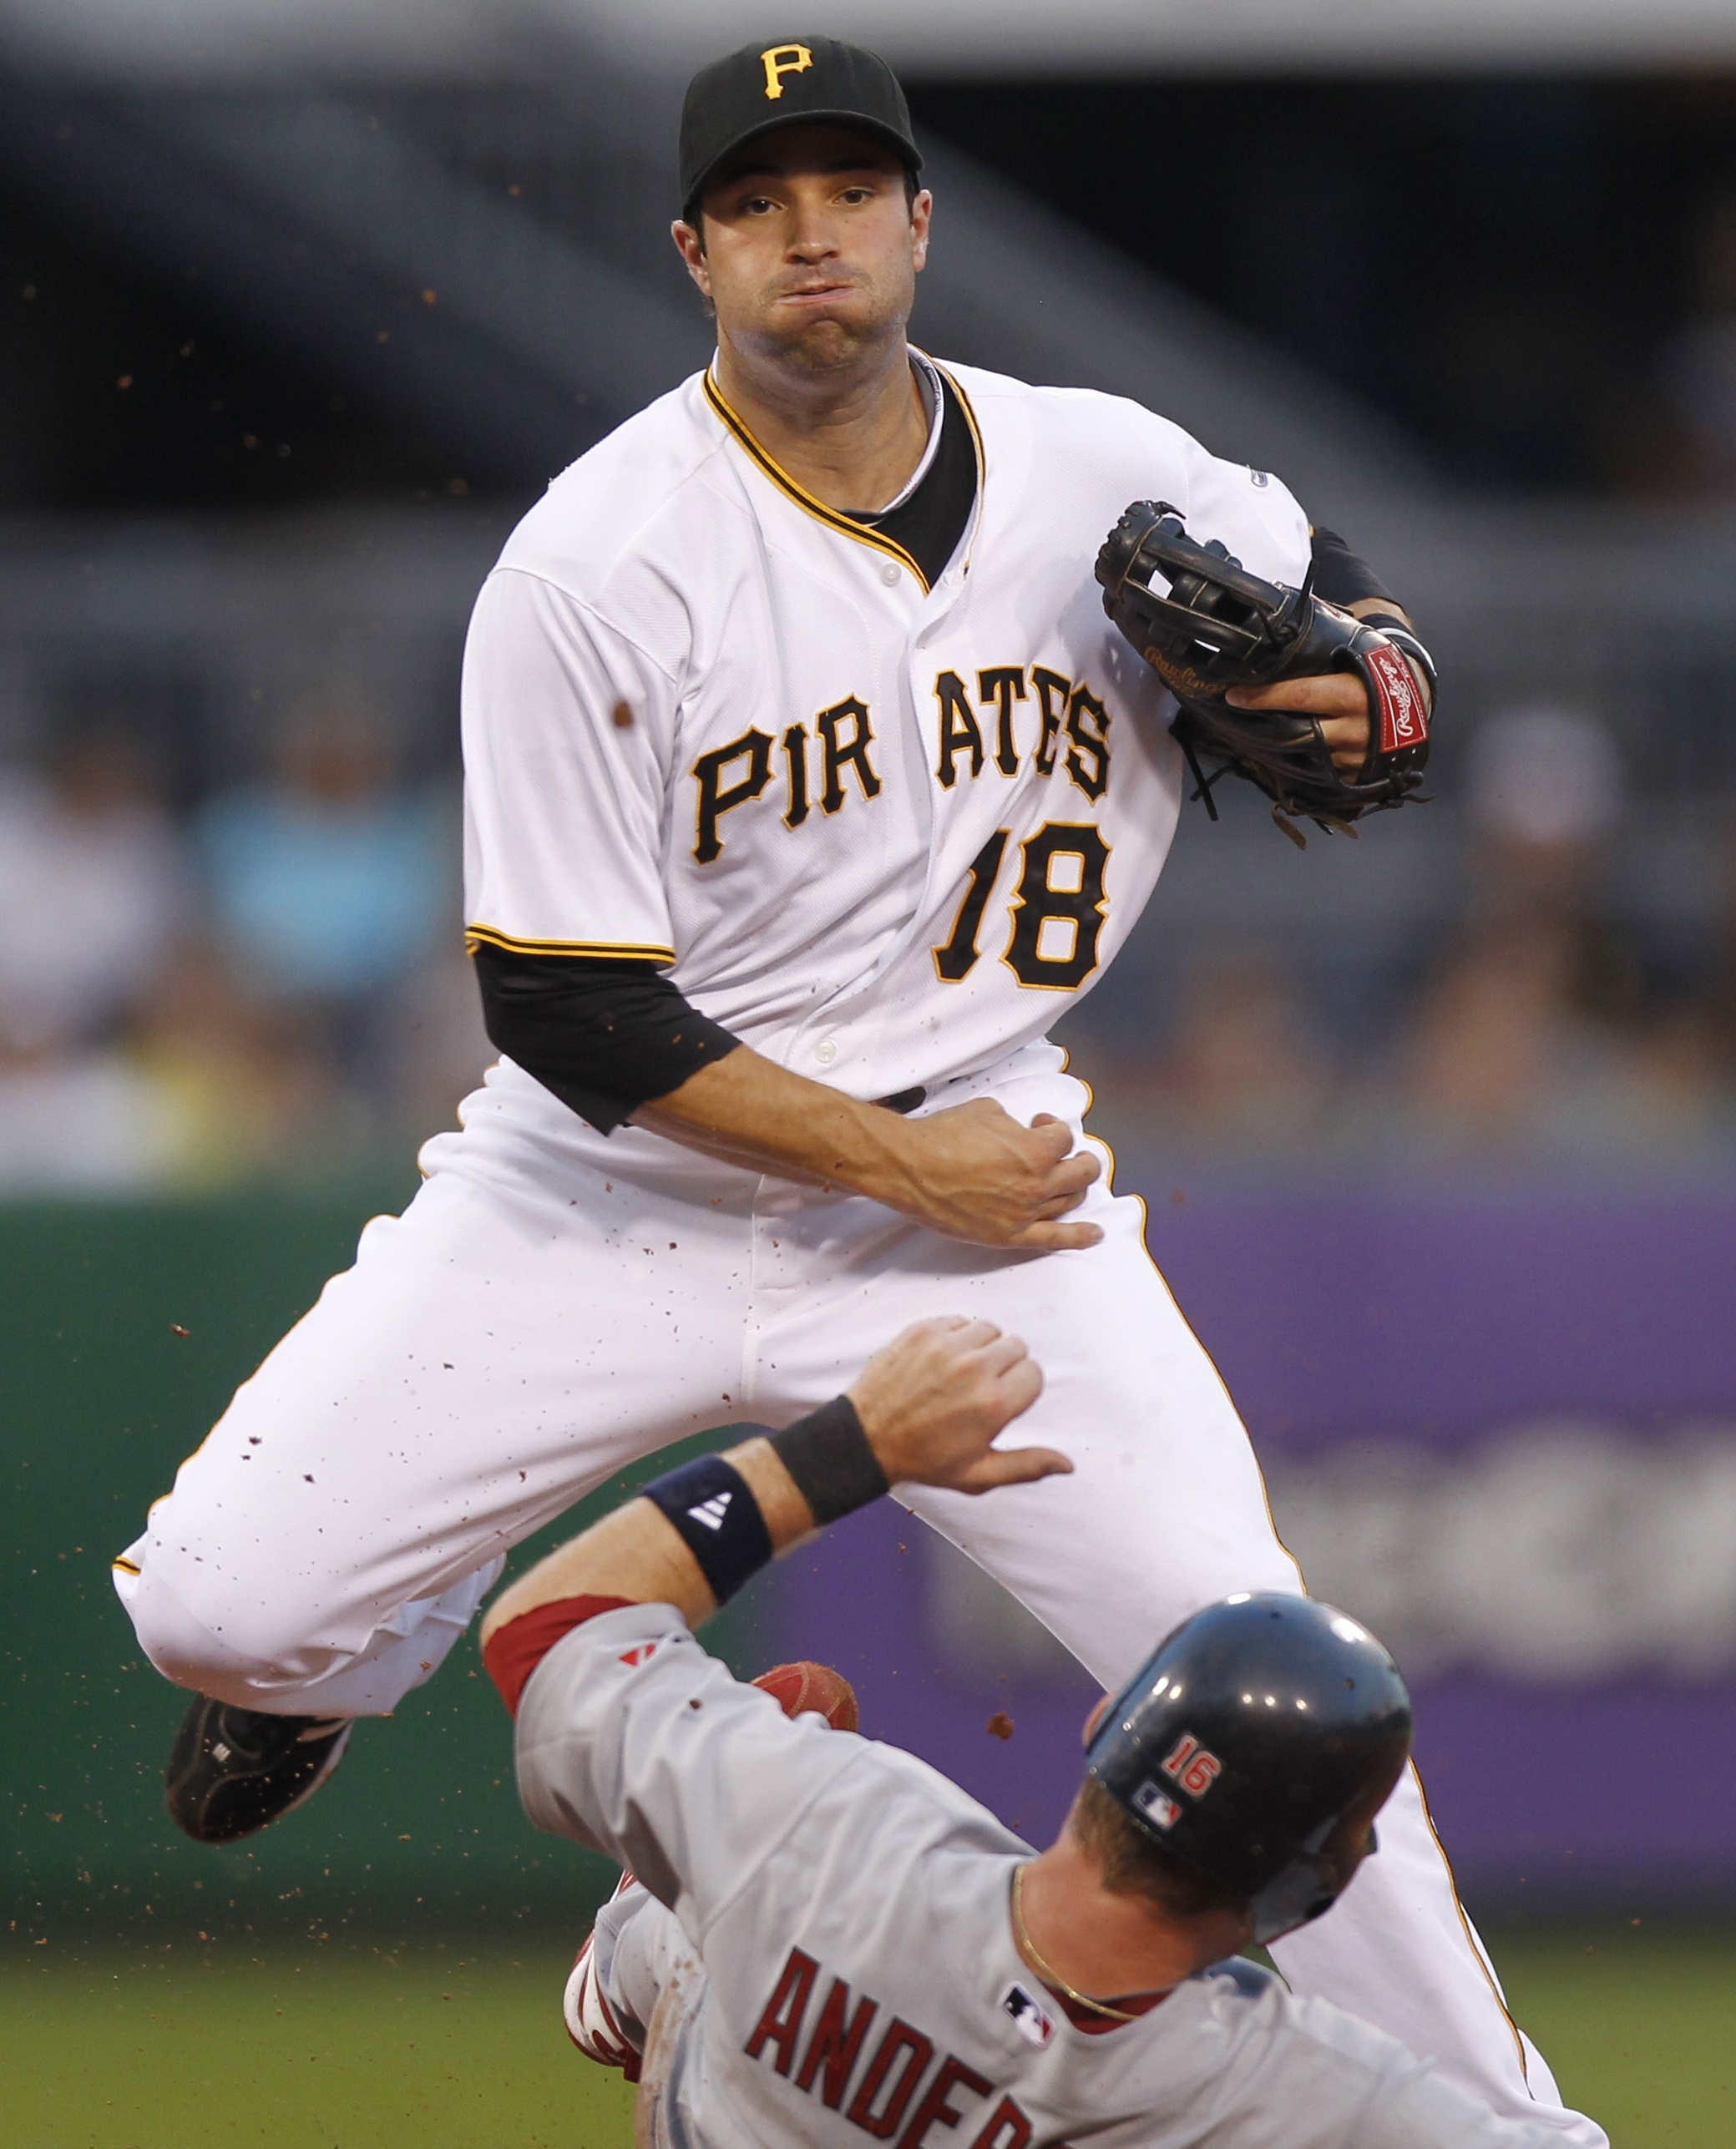 Gearceerd Fotoelektrisch Manhattan Pittsburgh Pirates second baseman linked to Clemente | The Spokesman-Review